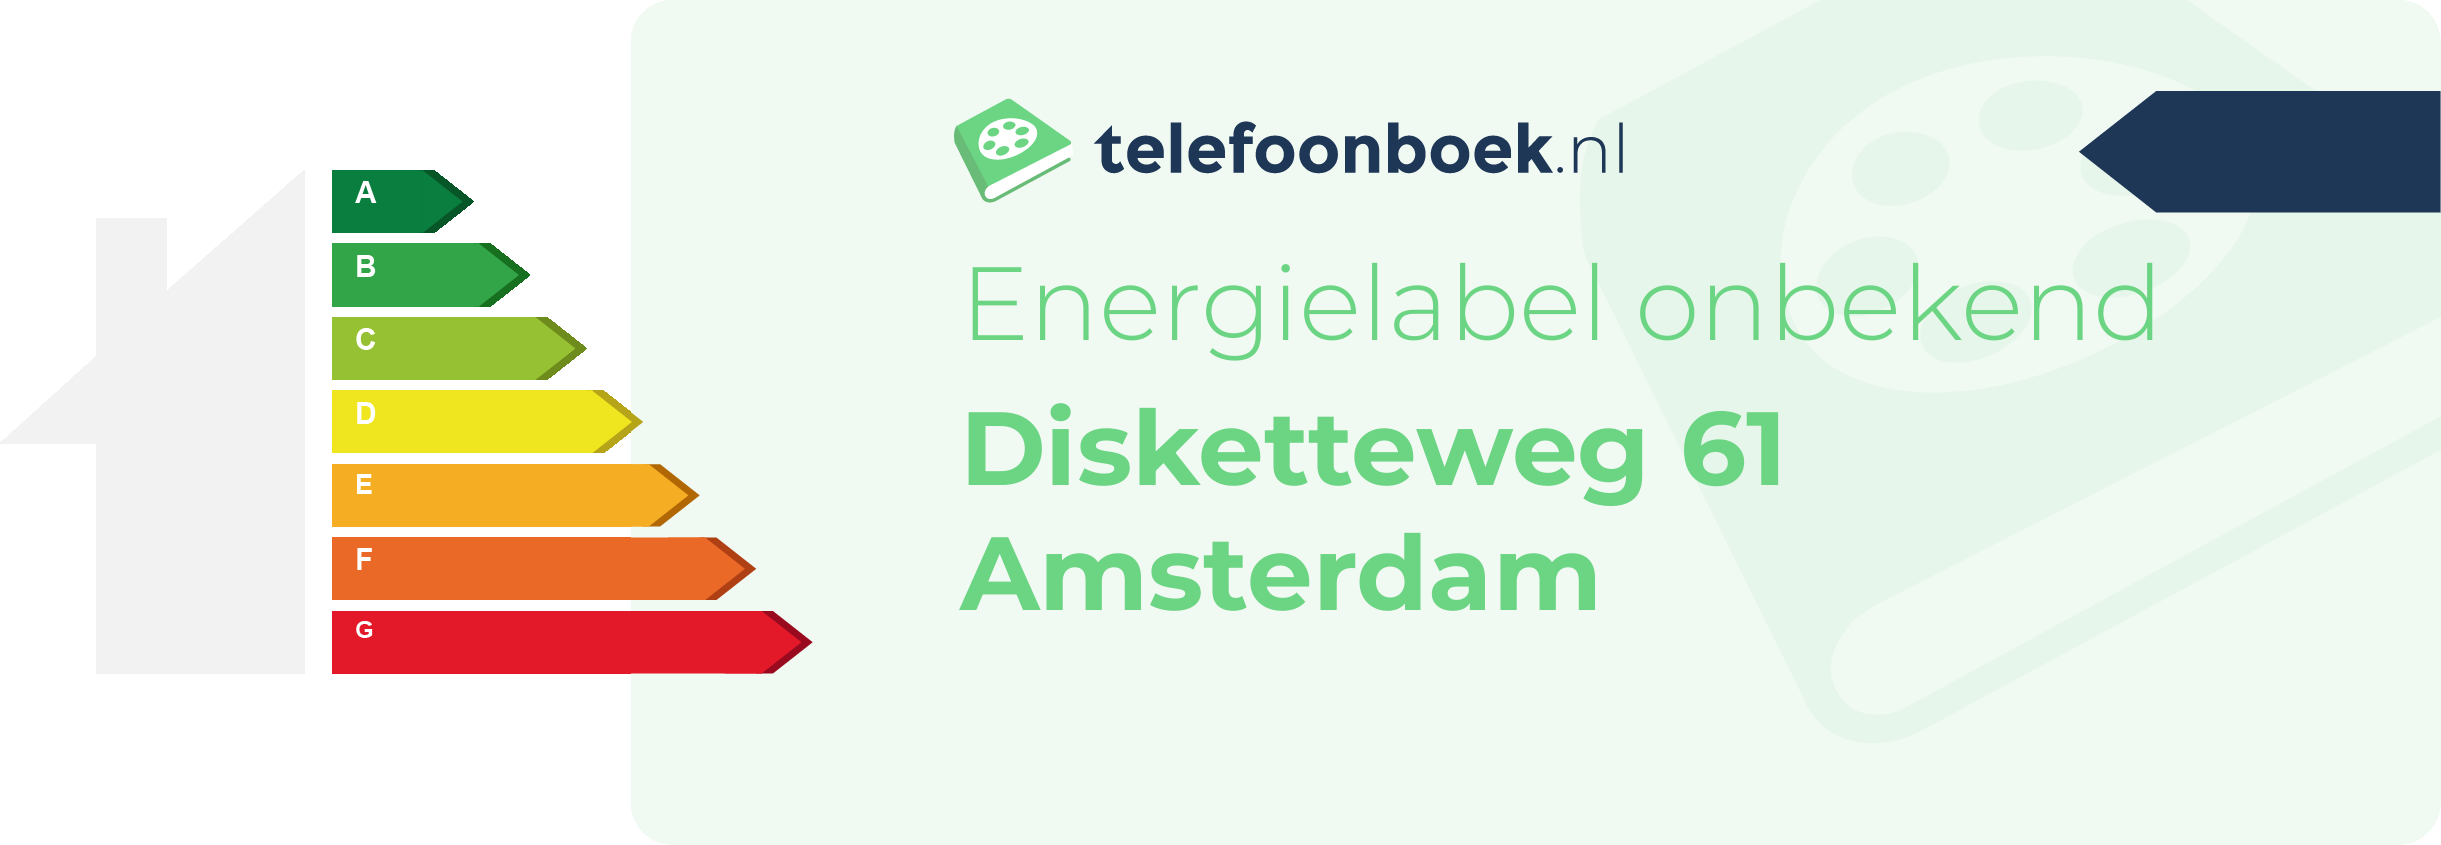 Energielabel Disketteweg 61 Amsterdam